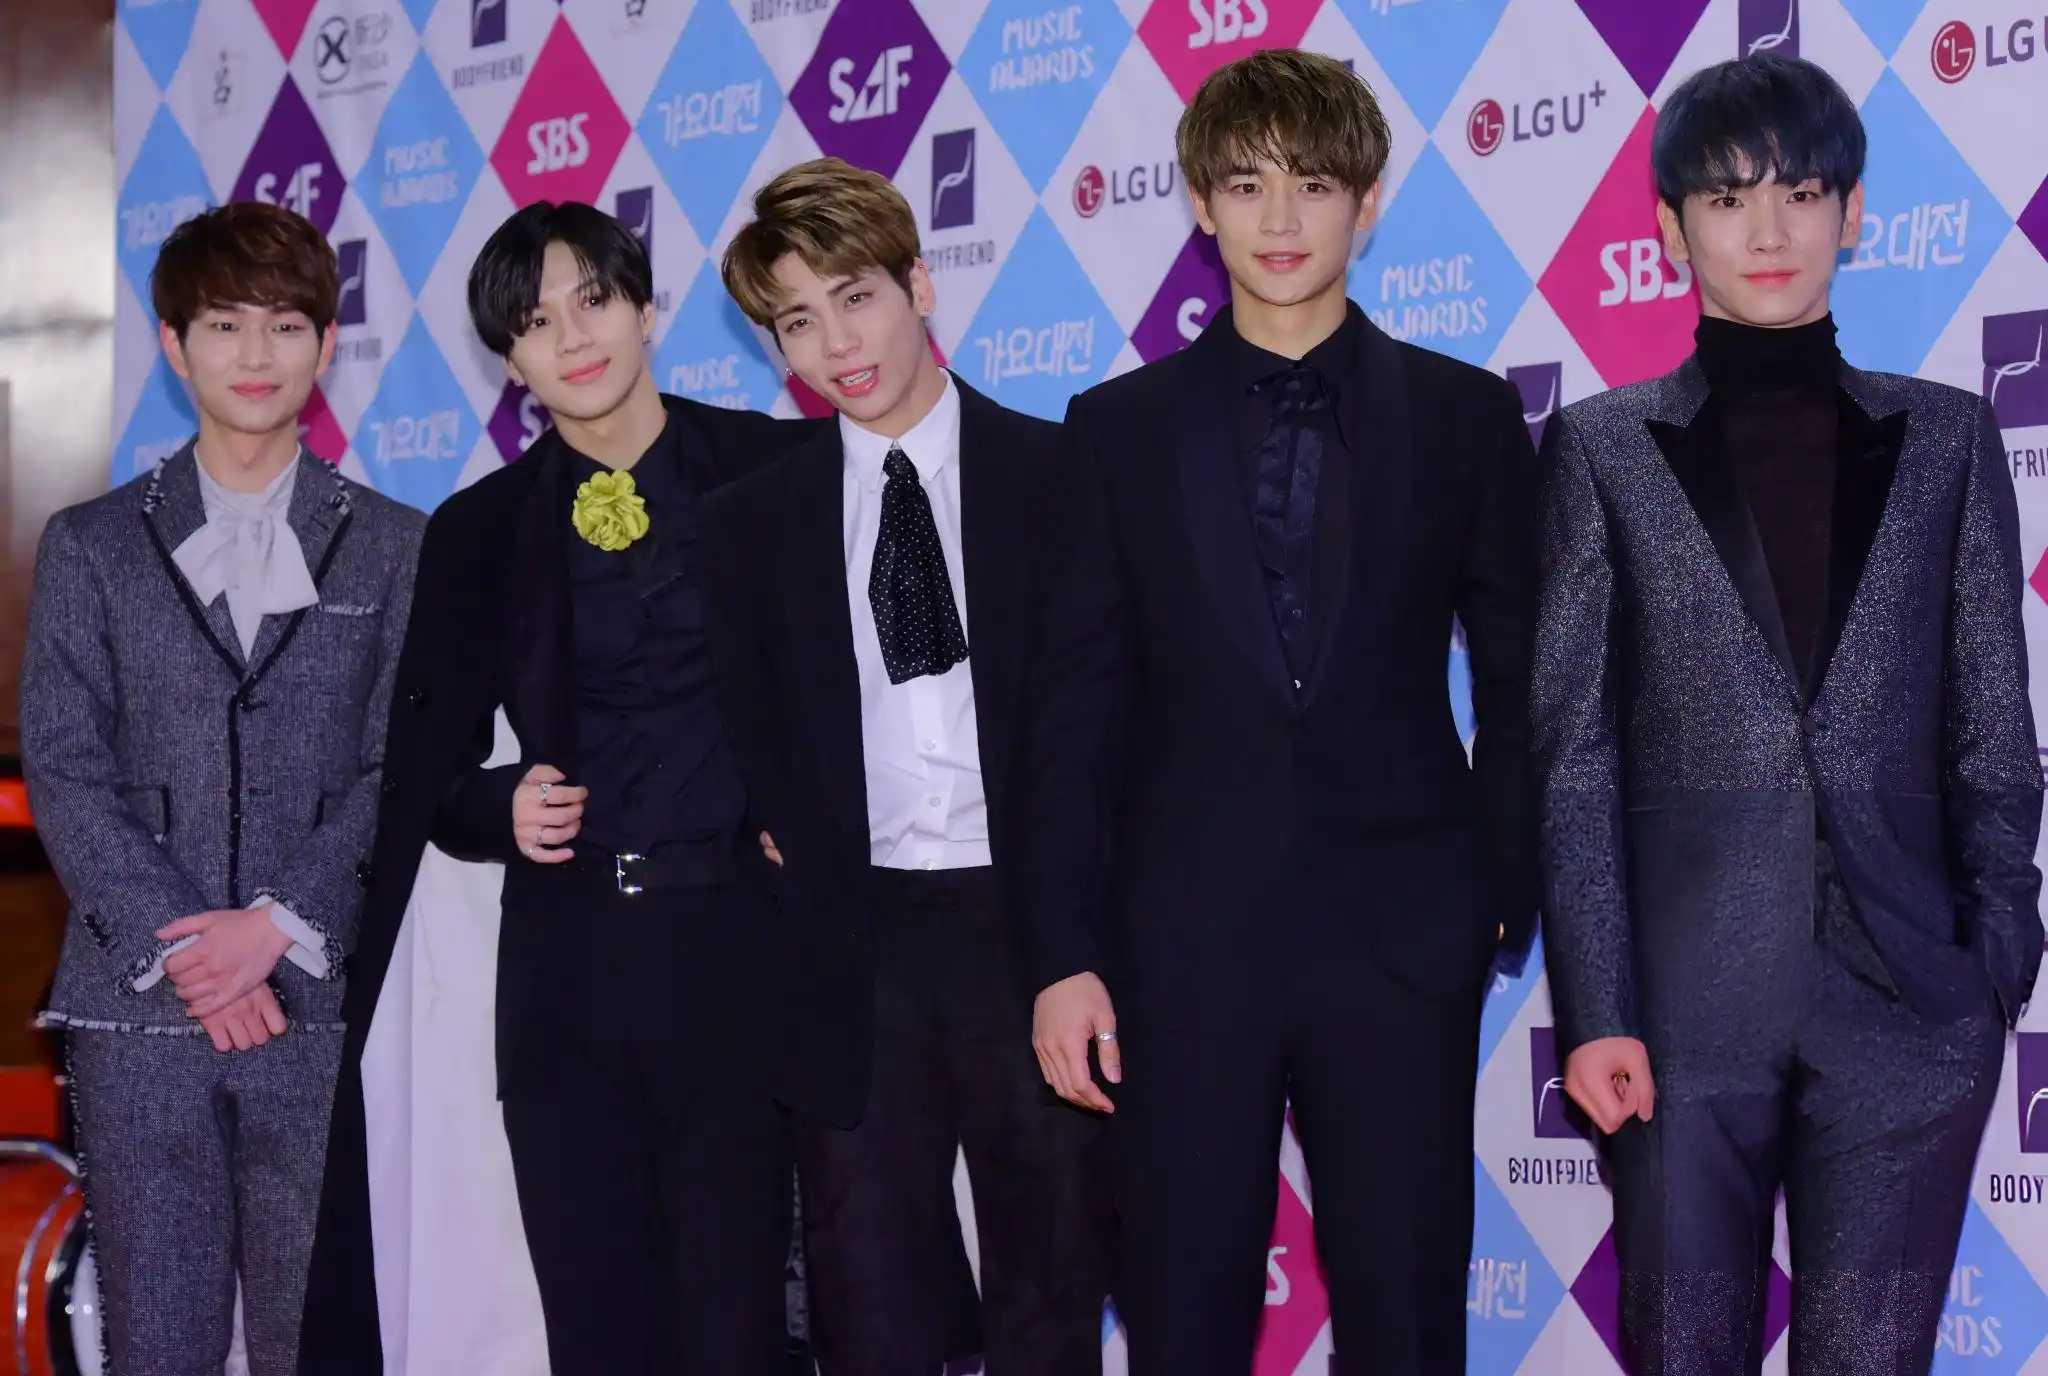 SHINee Members: Onew, Key, Minho, Taemin, and Jonghyun